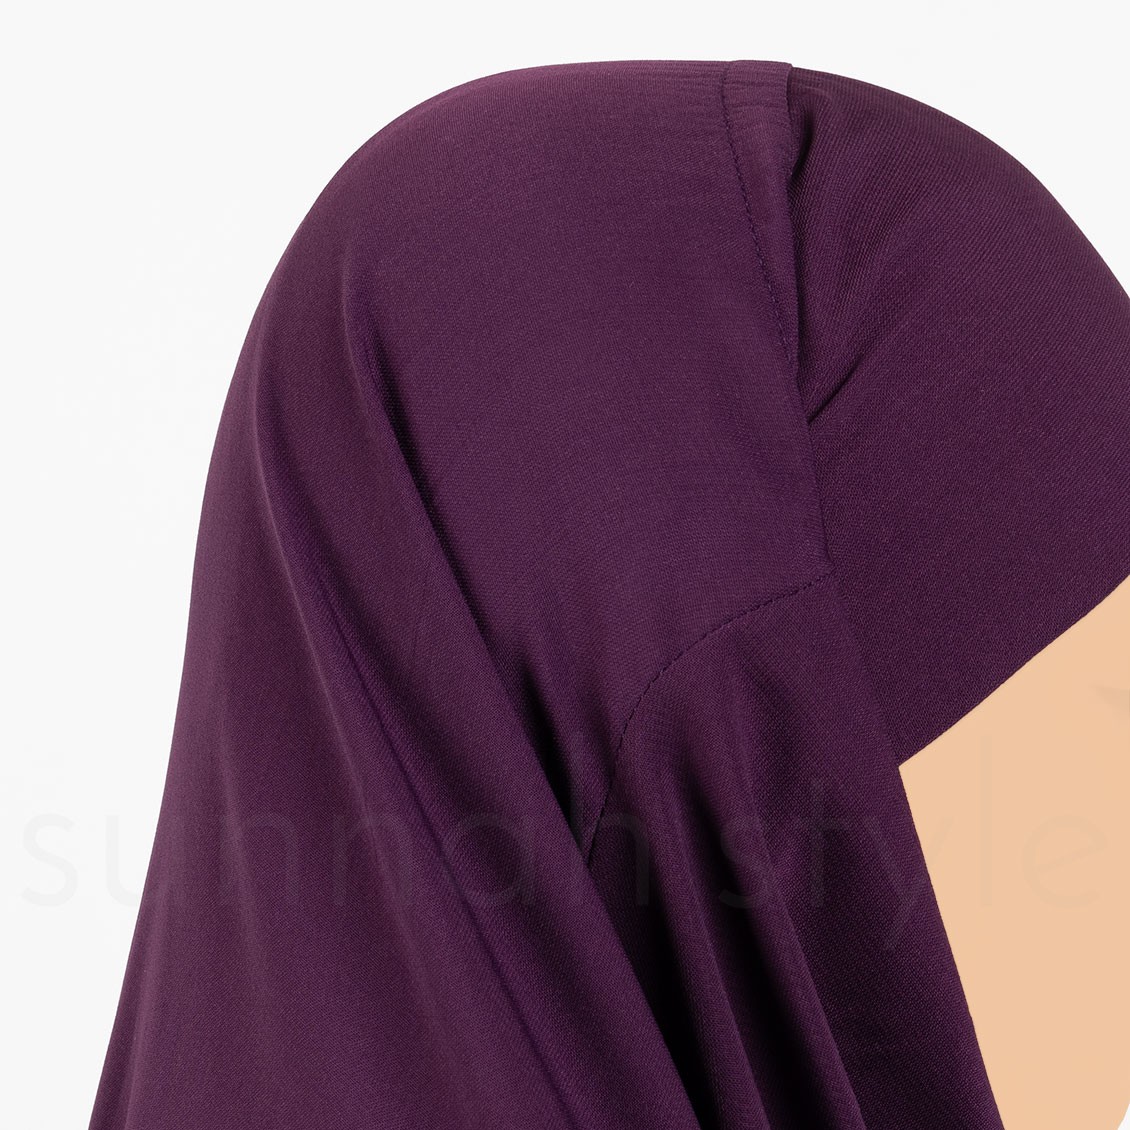 Sunnah Style Girls Plain Full Length Jilbab Grape